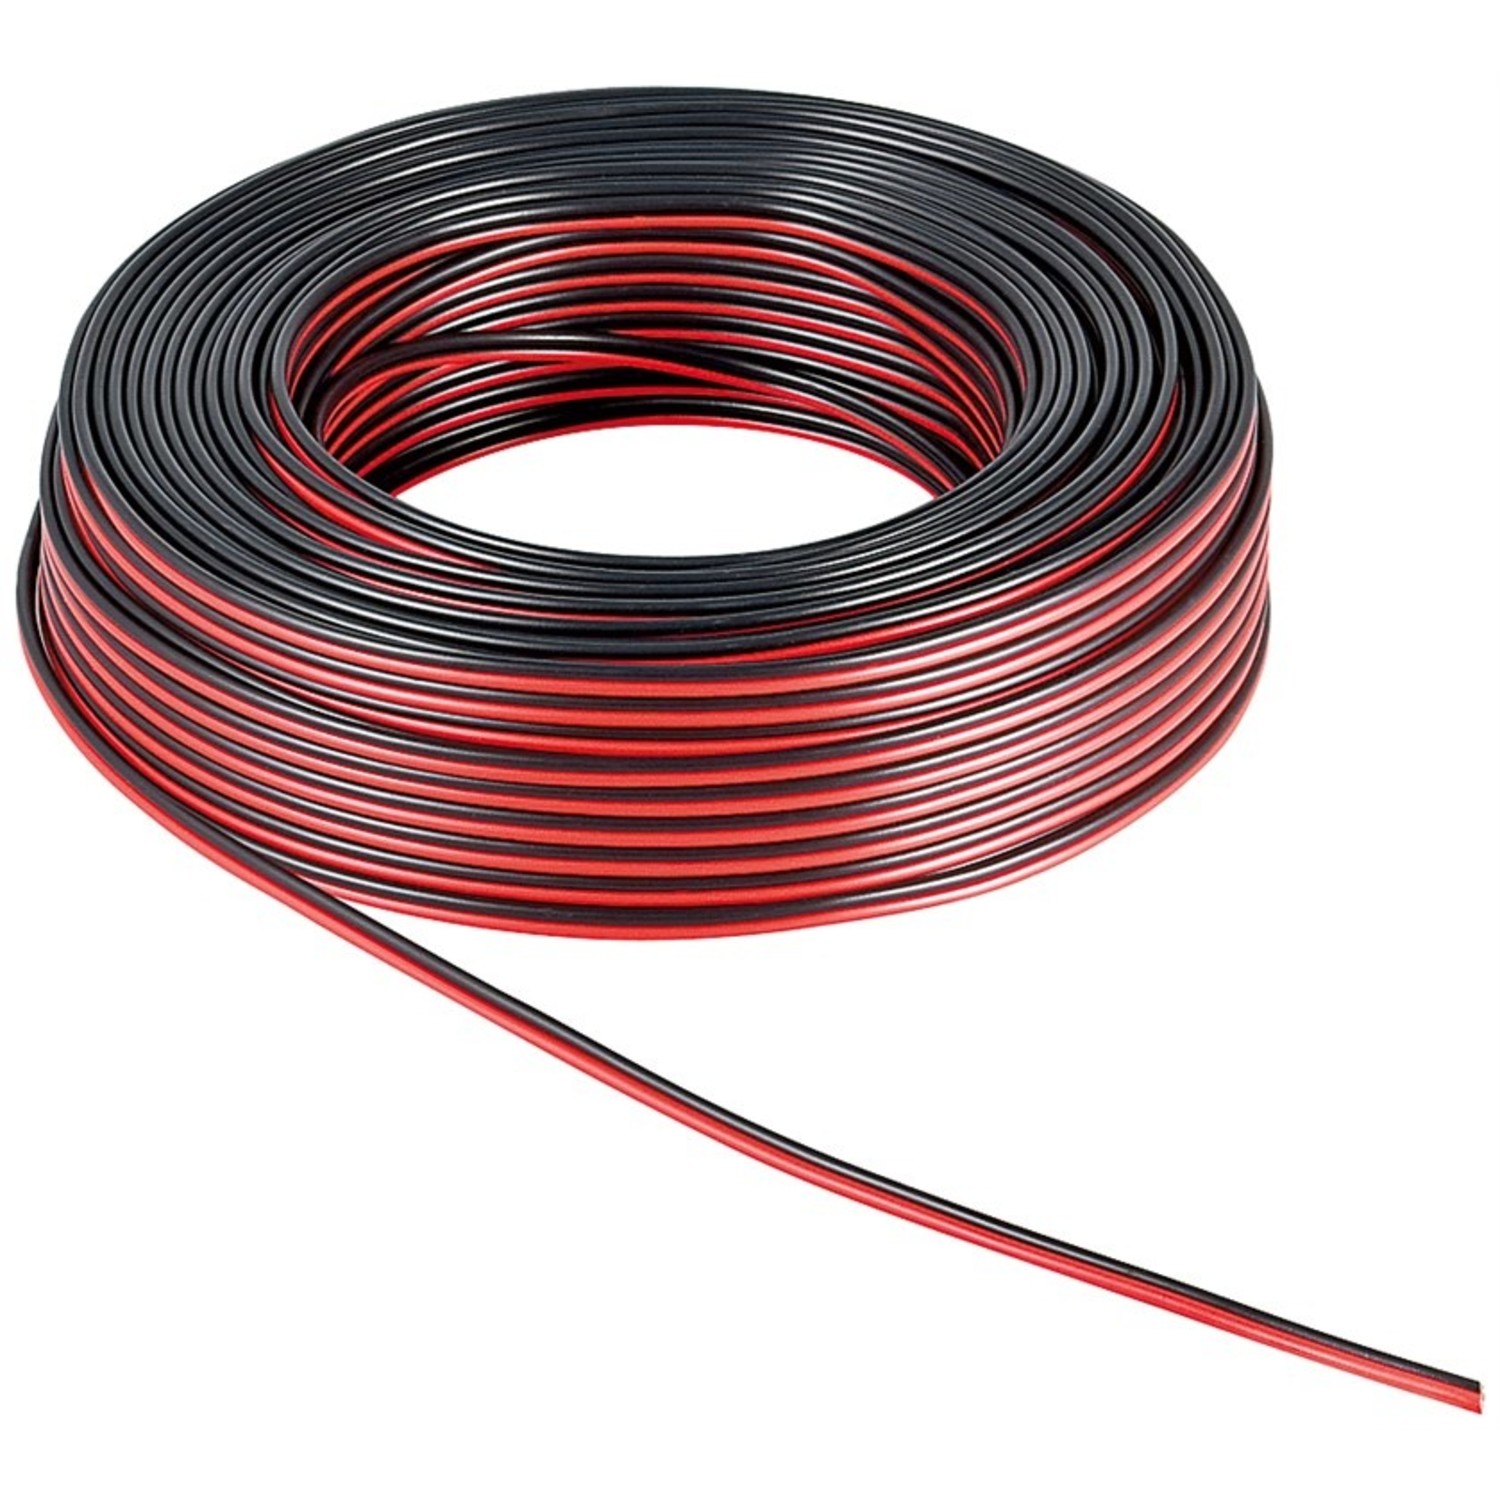 Speaker Kabel zwart rood CCA 2x1,5mm2 50m - Ben's electronics